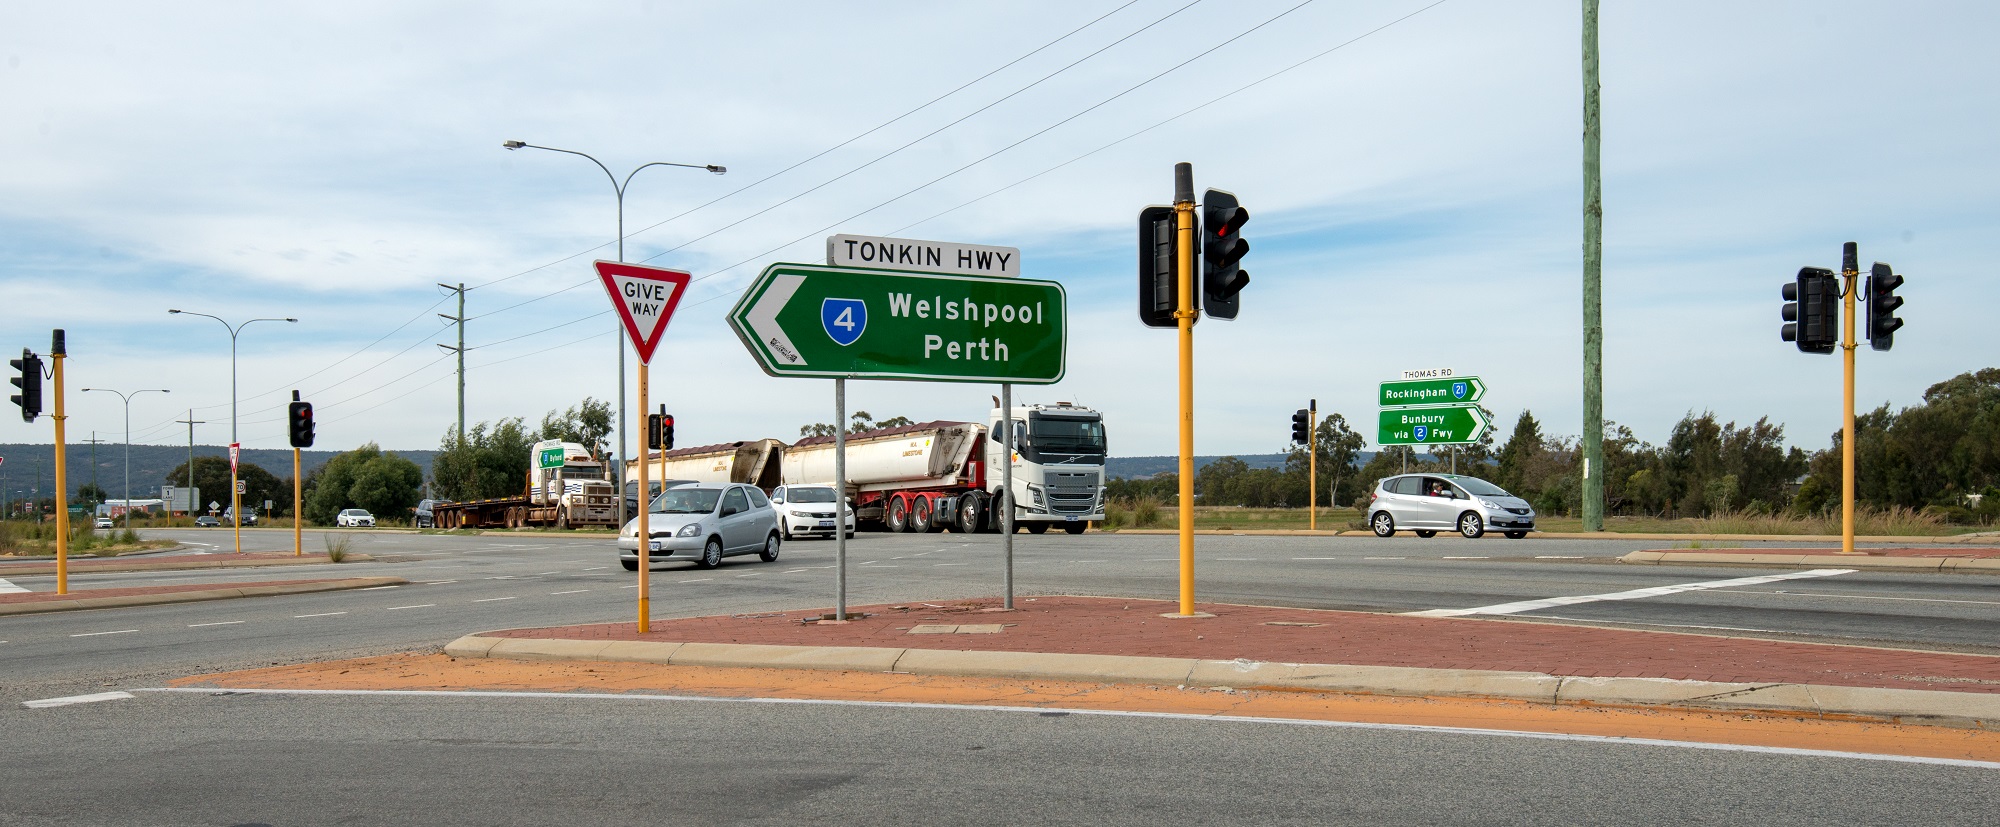 Tonkin Highway intersection